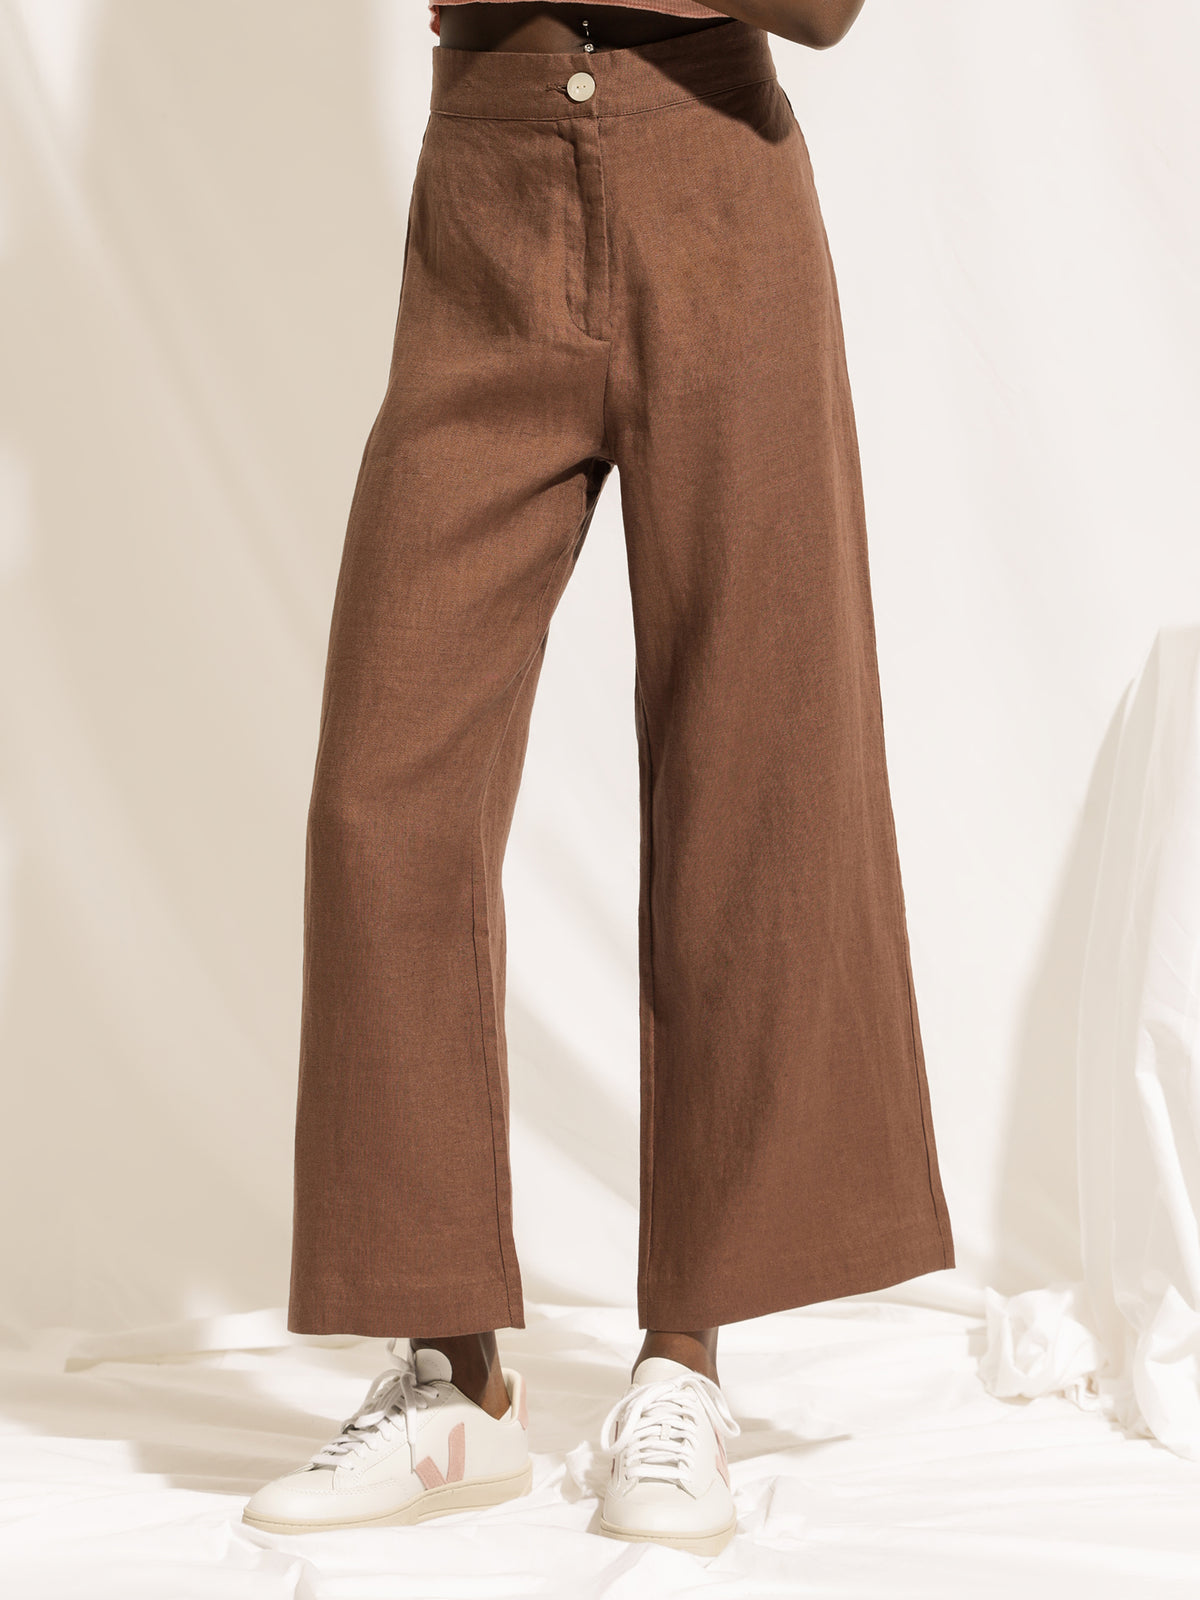 Rynn Linen Pants in Brown